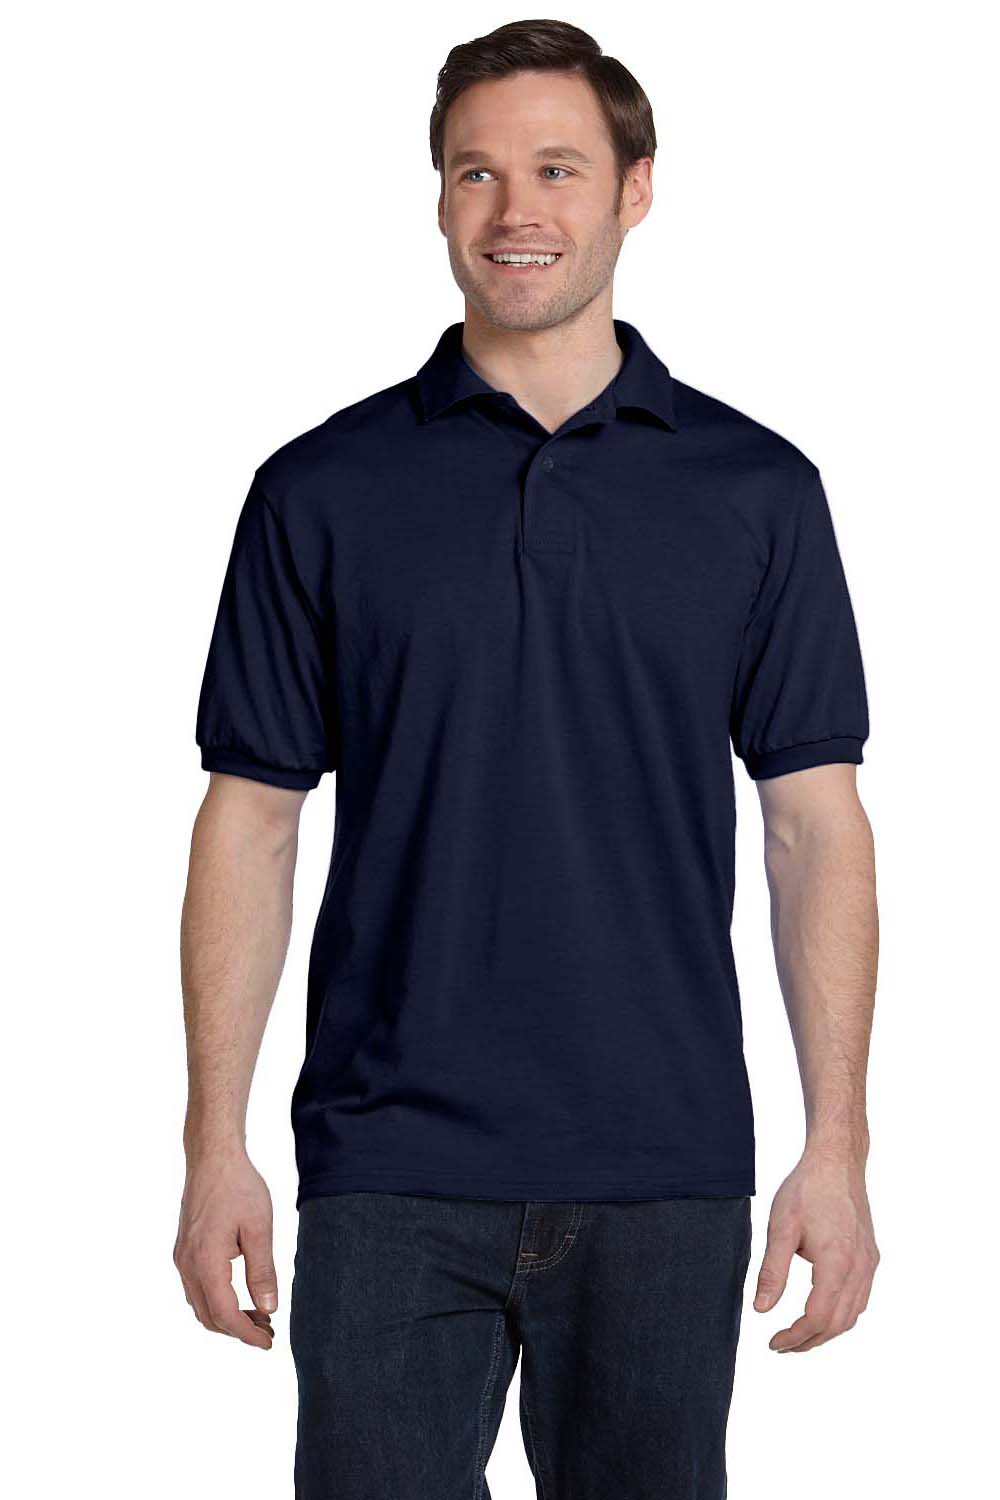 Hanes 054 Mens EcoSmart Short Sleeve Polo Shirt Navy Blue Front